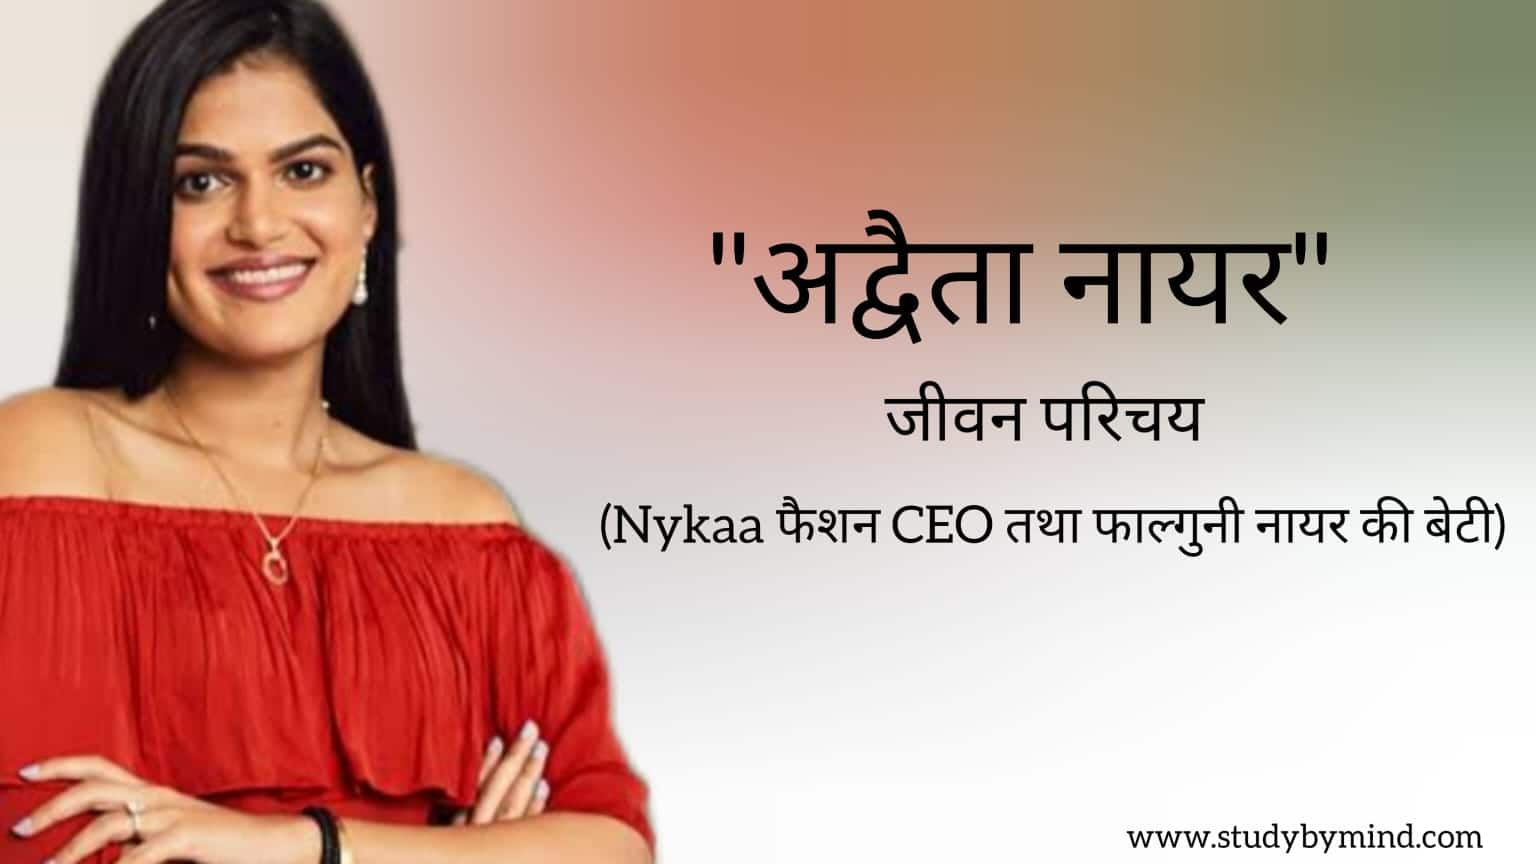 You are currently viewing अद्वैता नायर जीवन परिचय Adwaita nayar biography in hindi (Nykaa फैशन CEO तथा फाल्गुनी नायर की बेटी)